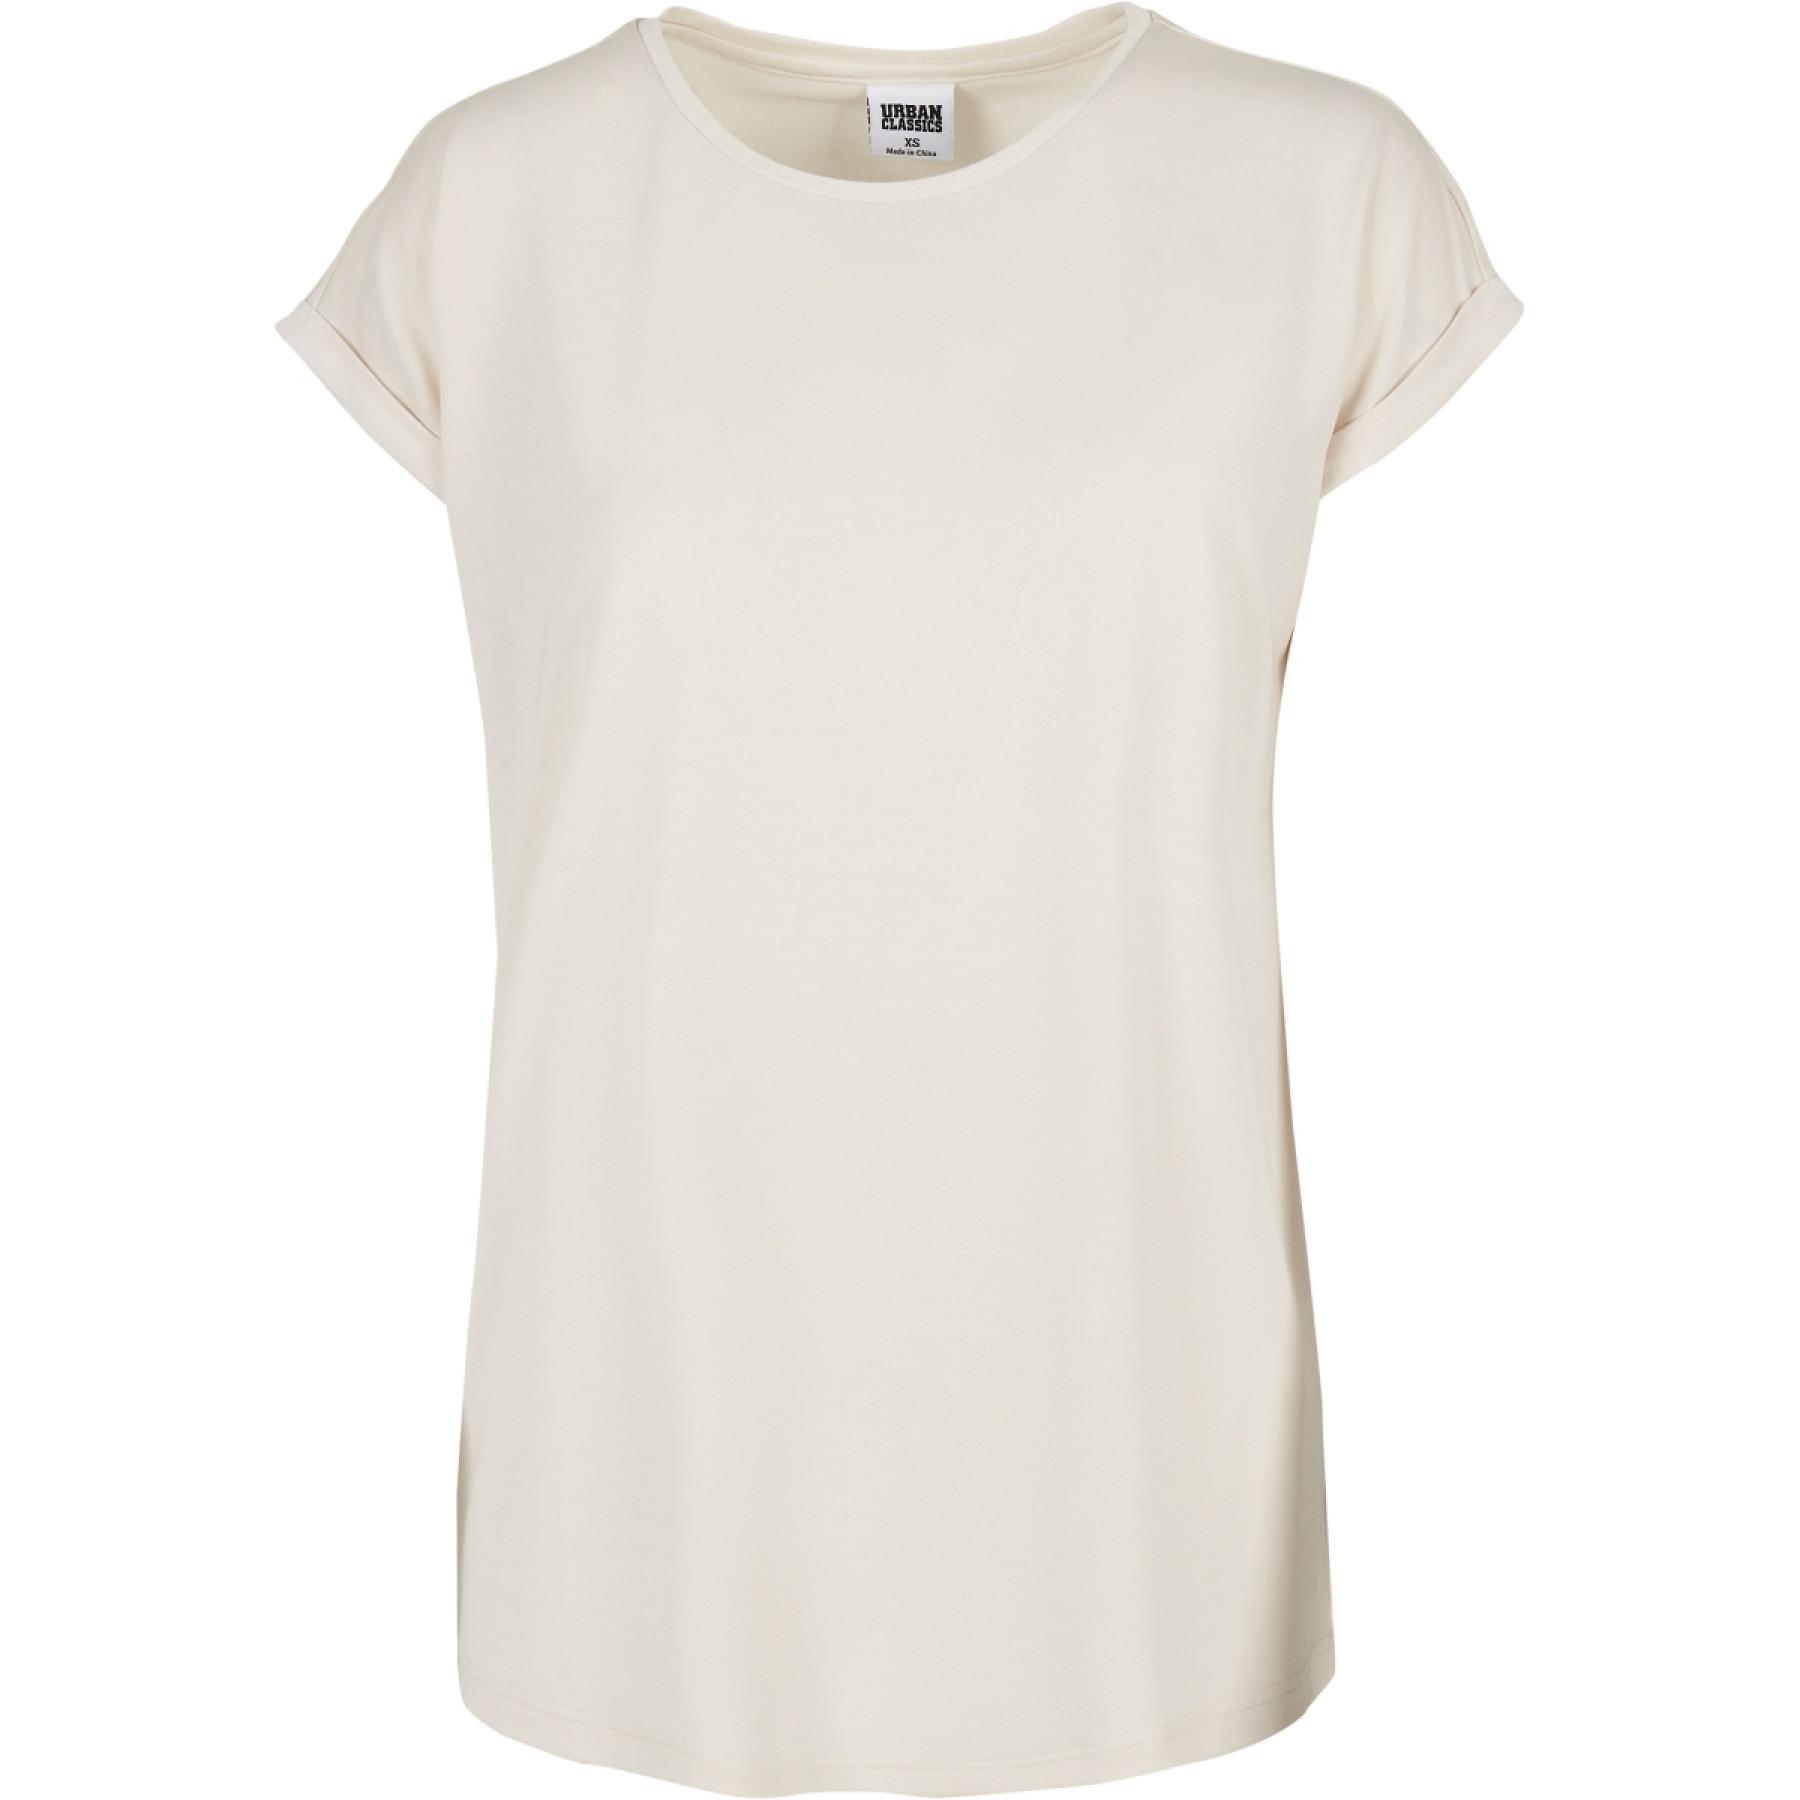 Frauen-T-Shirt Urban Classics modal extended shoulder